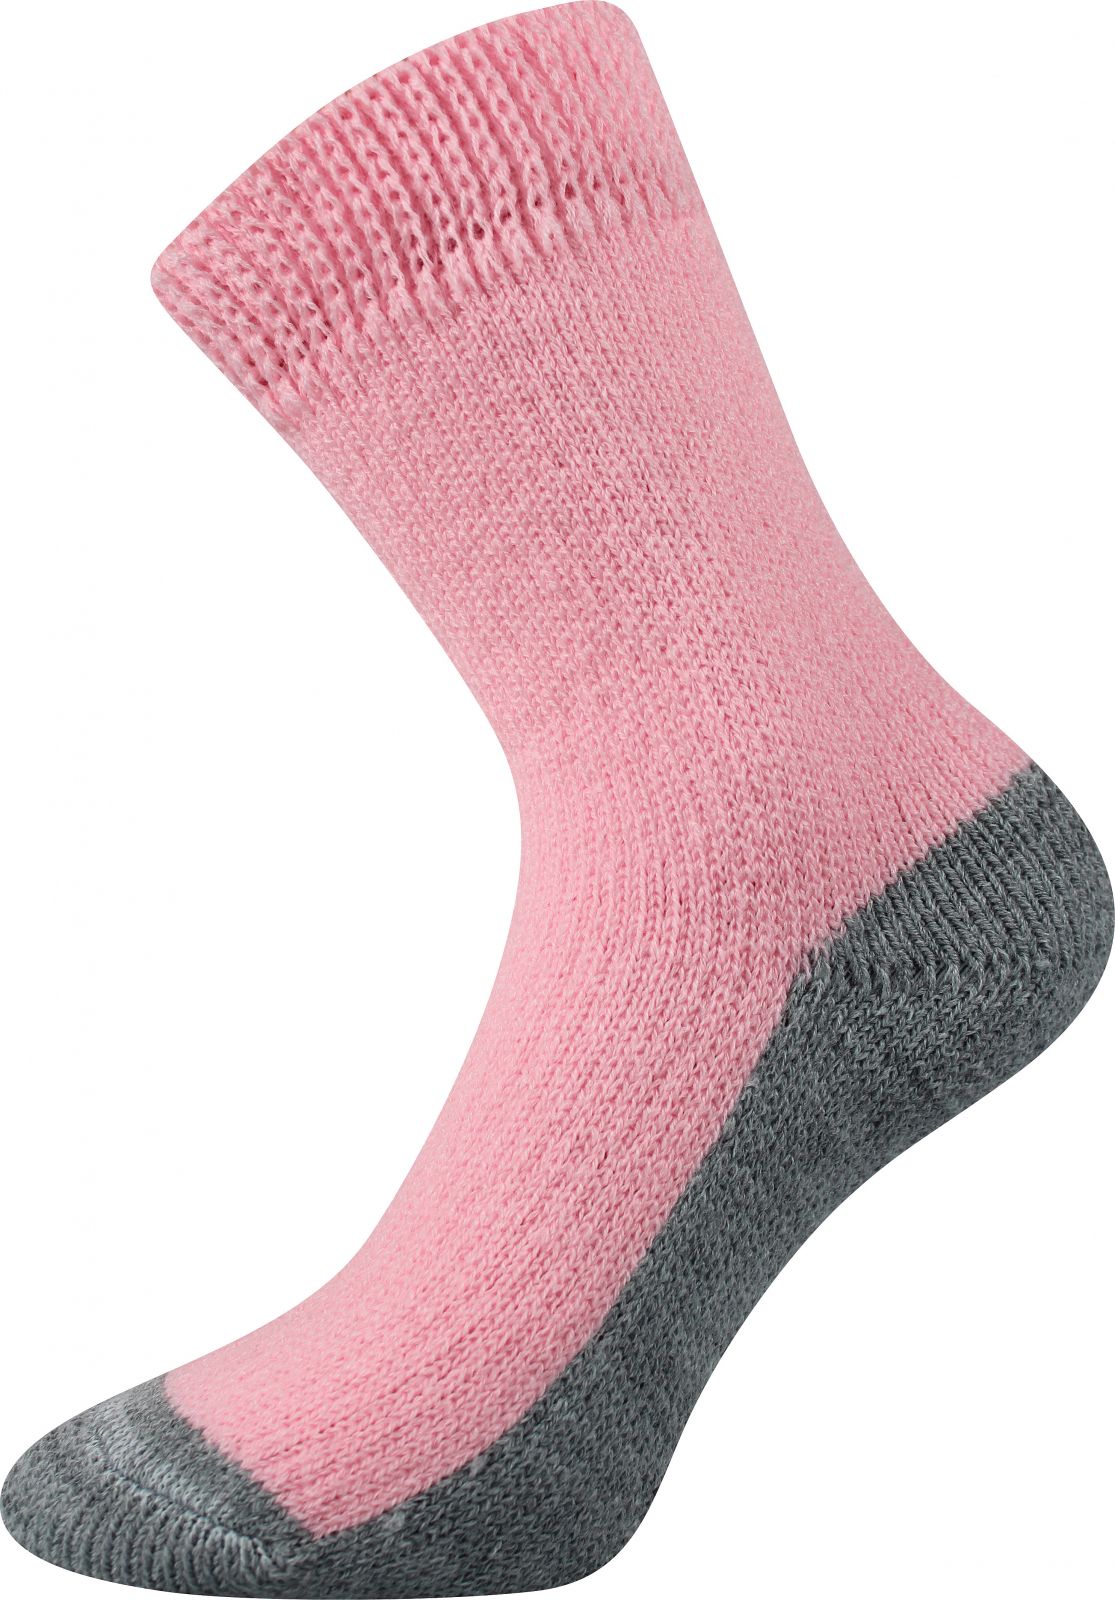 Boma® ponožky Spací růžová